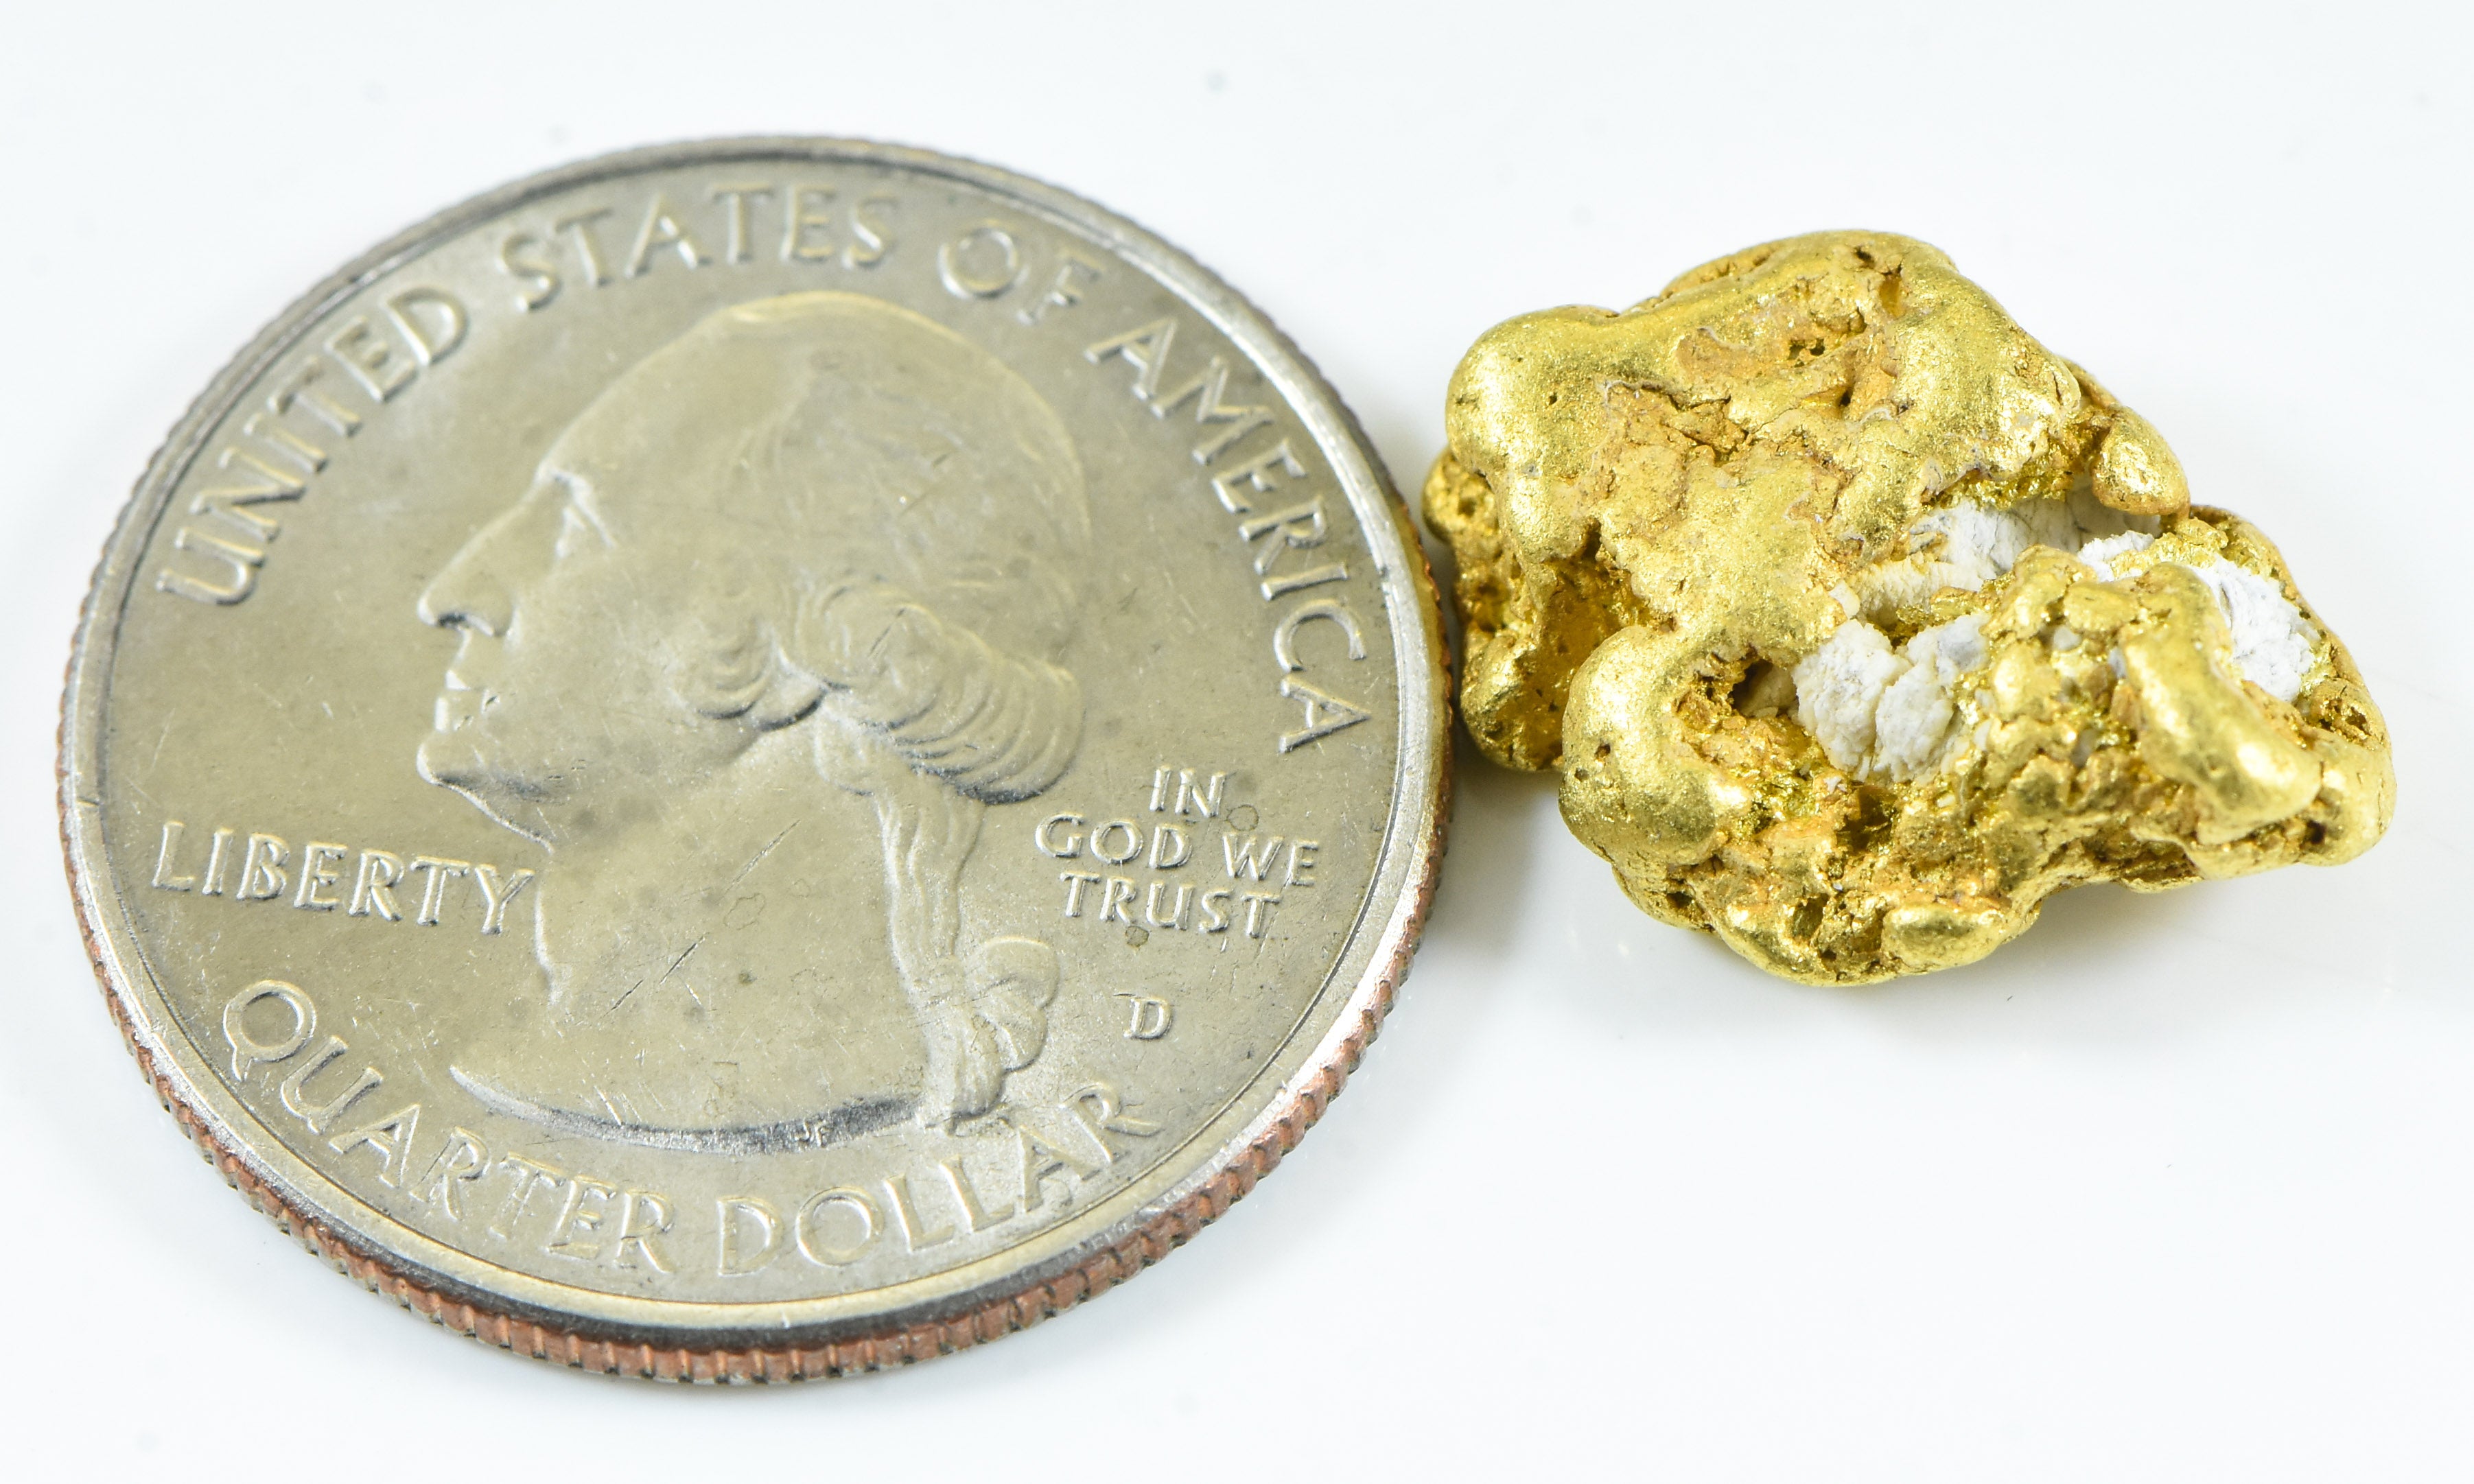 QN-21 "Alaskan BC Gold Nuggets with Quartz" Genuine 5.69 Grams